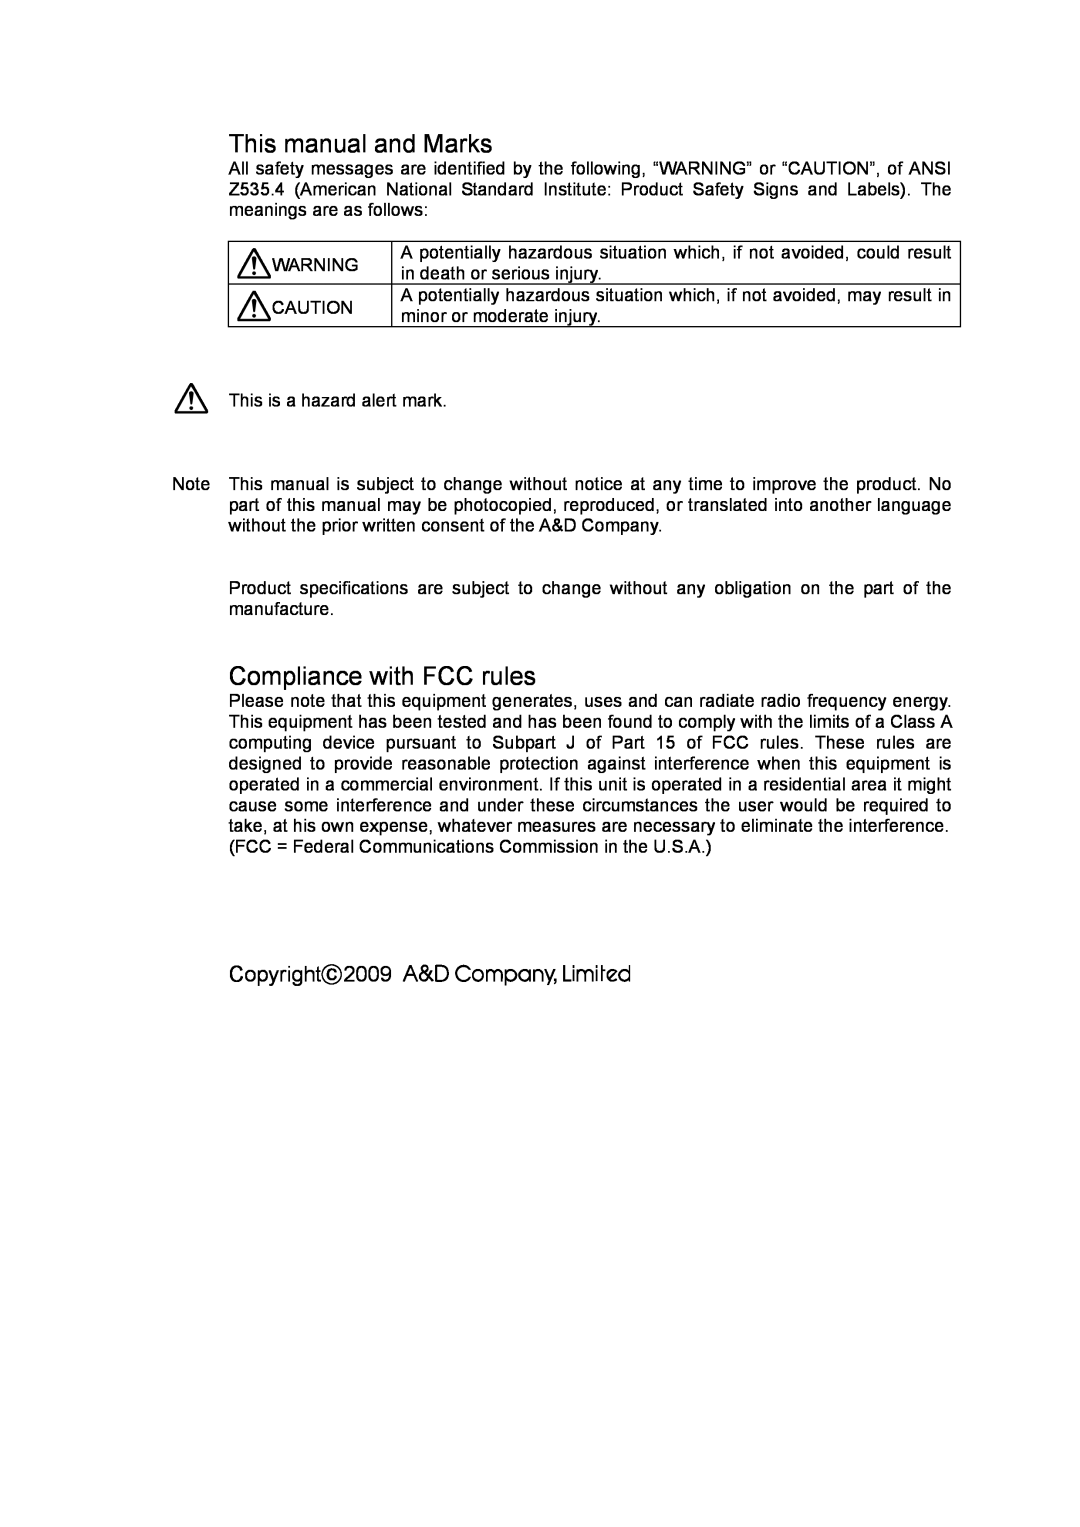 A&D EJ-440, EJ-6100, EJ-3000, EJ-200, EJ-4100, EJ-120 This manual and Marks, Compliance with FCC rules, Copyright2009 